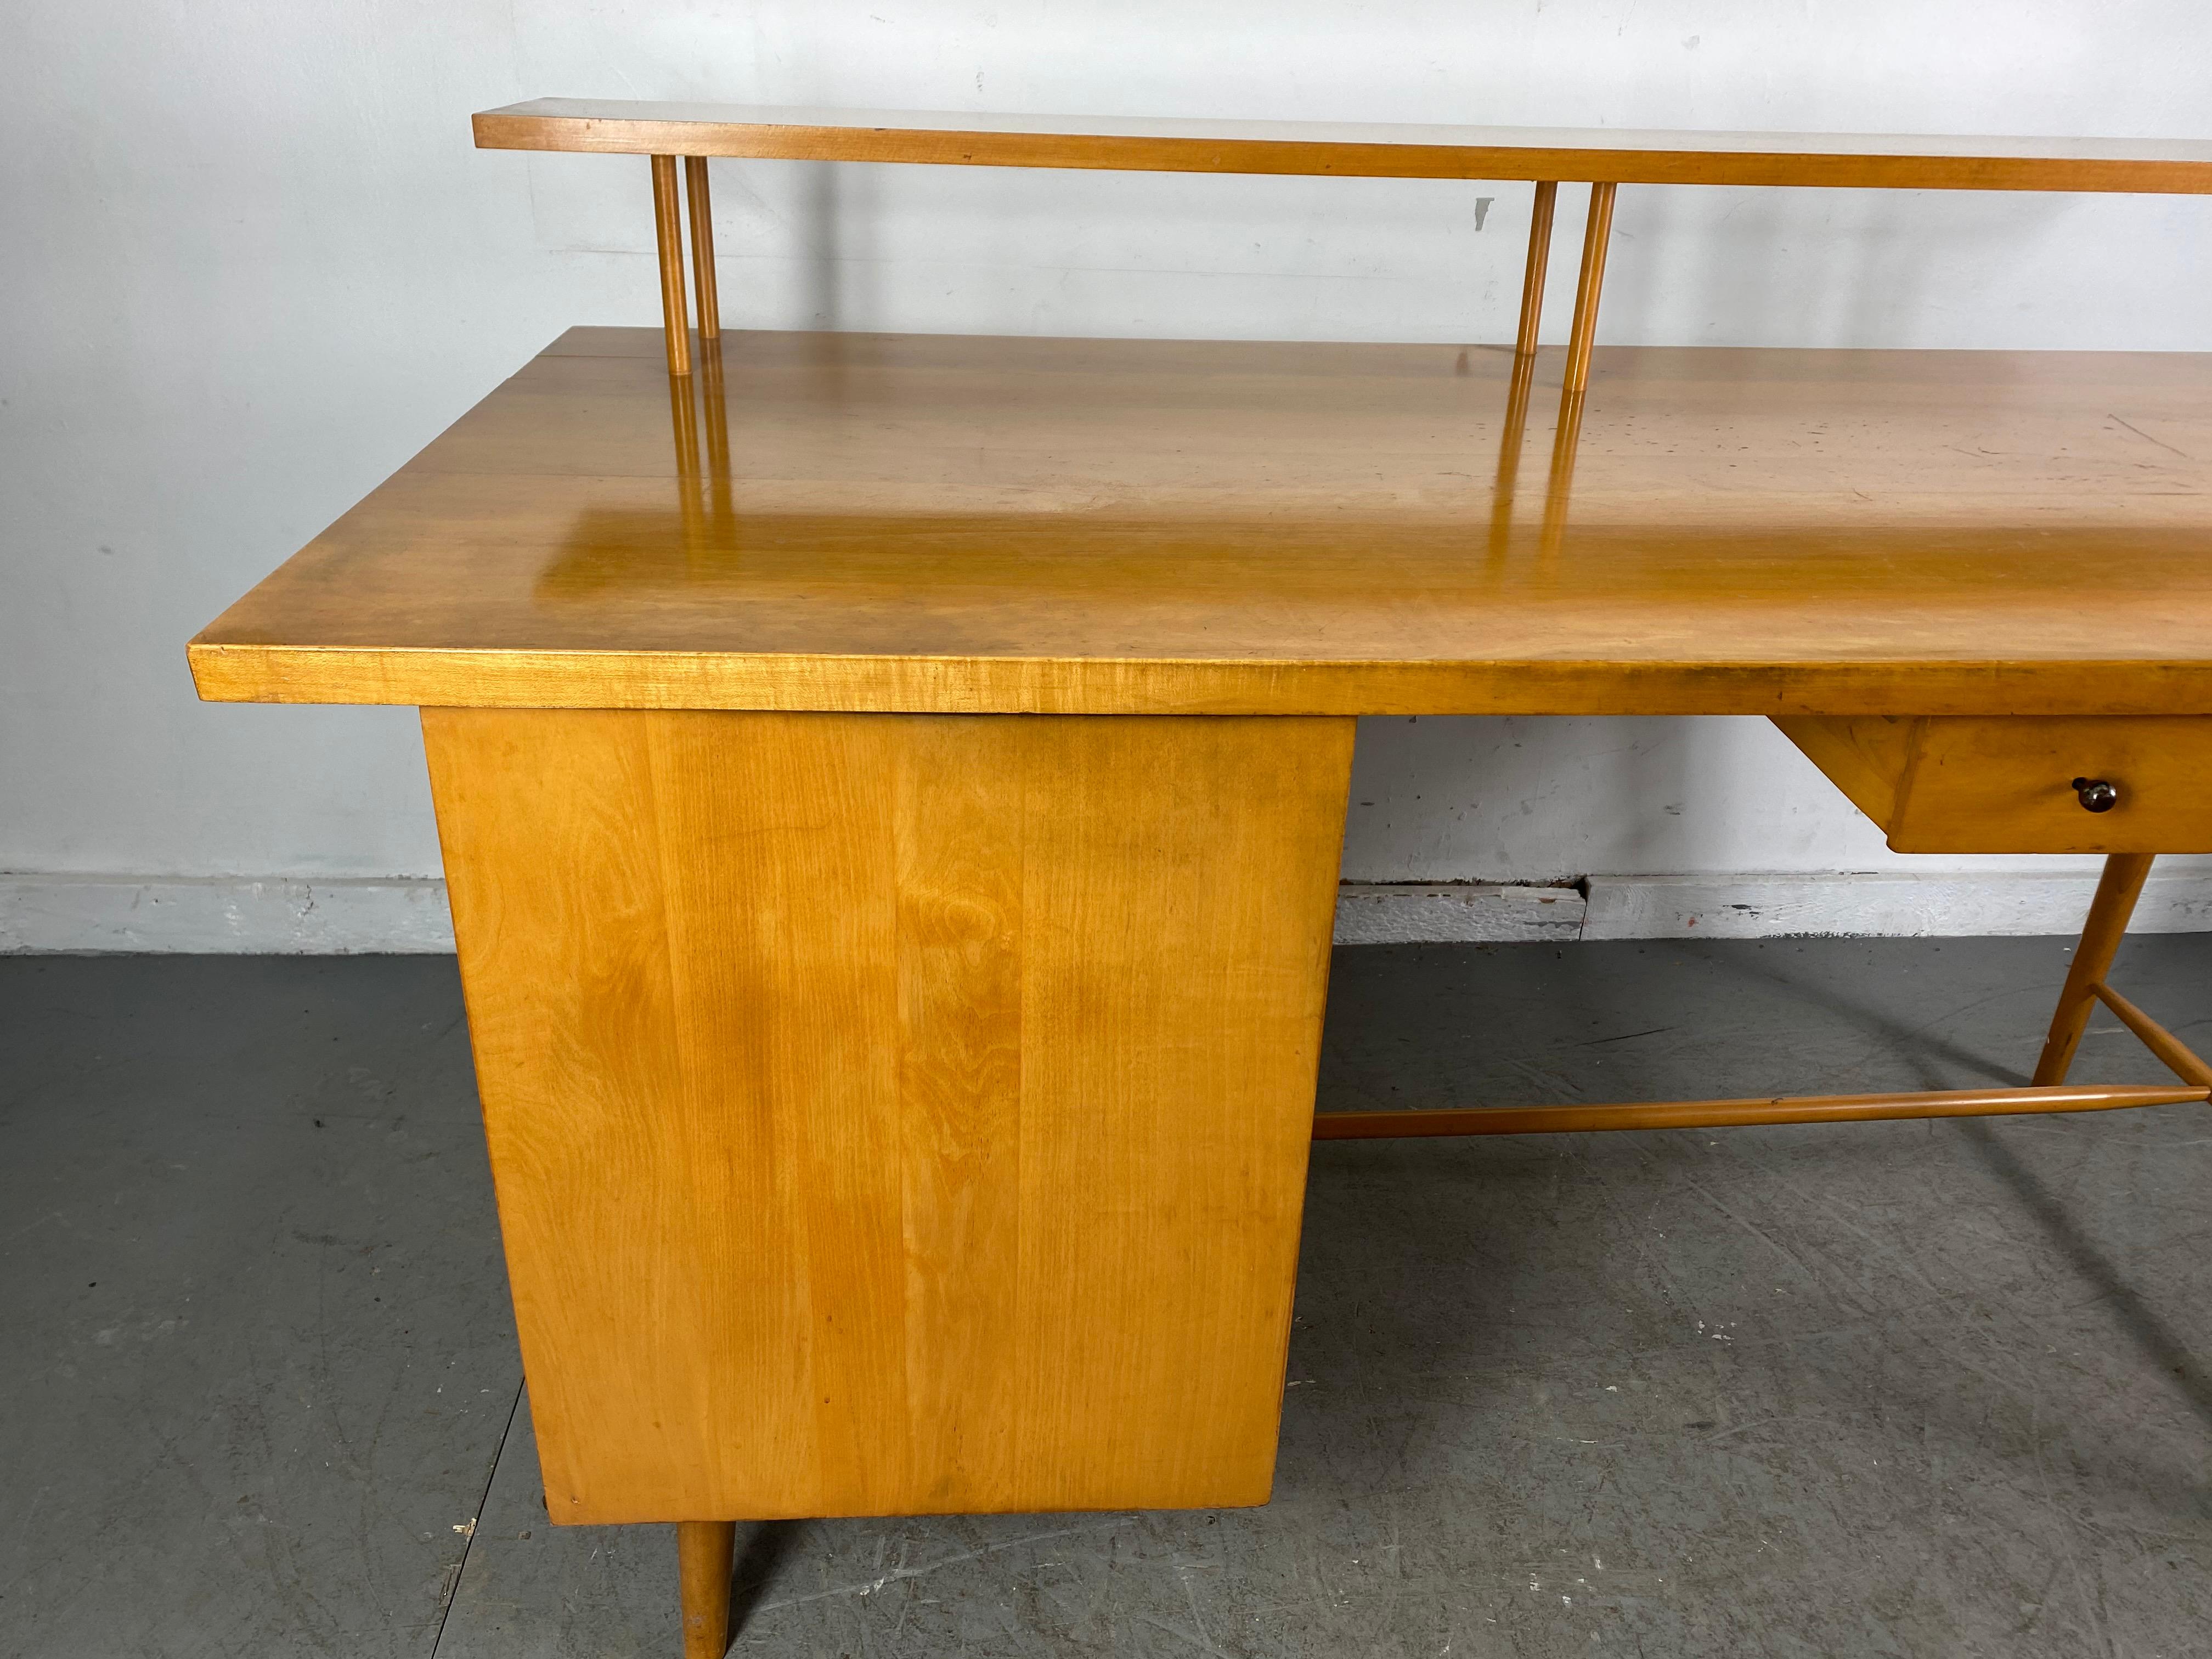 Brass Rare Paul McCobb Desk in Maple, 1950s, Multi-Level, Classic Modernist Design